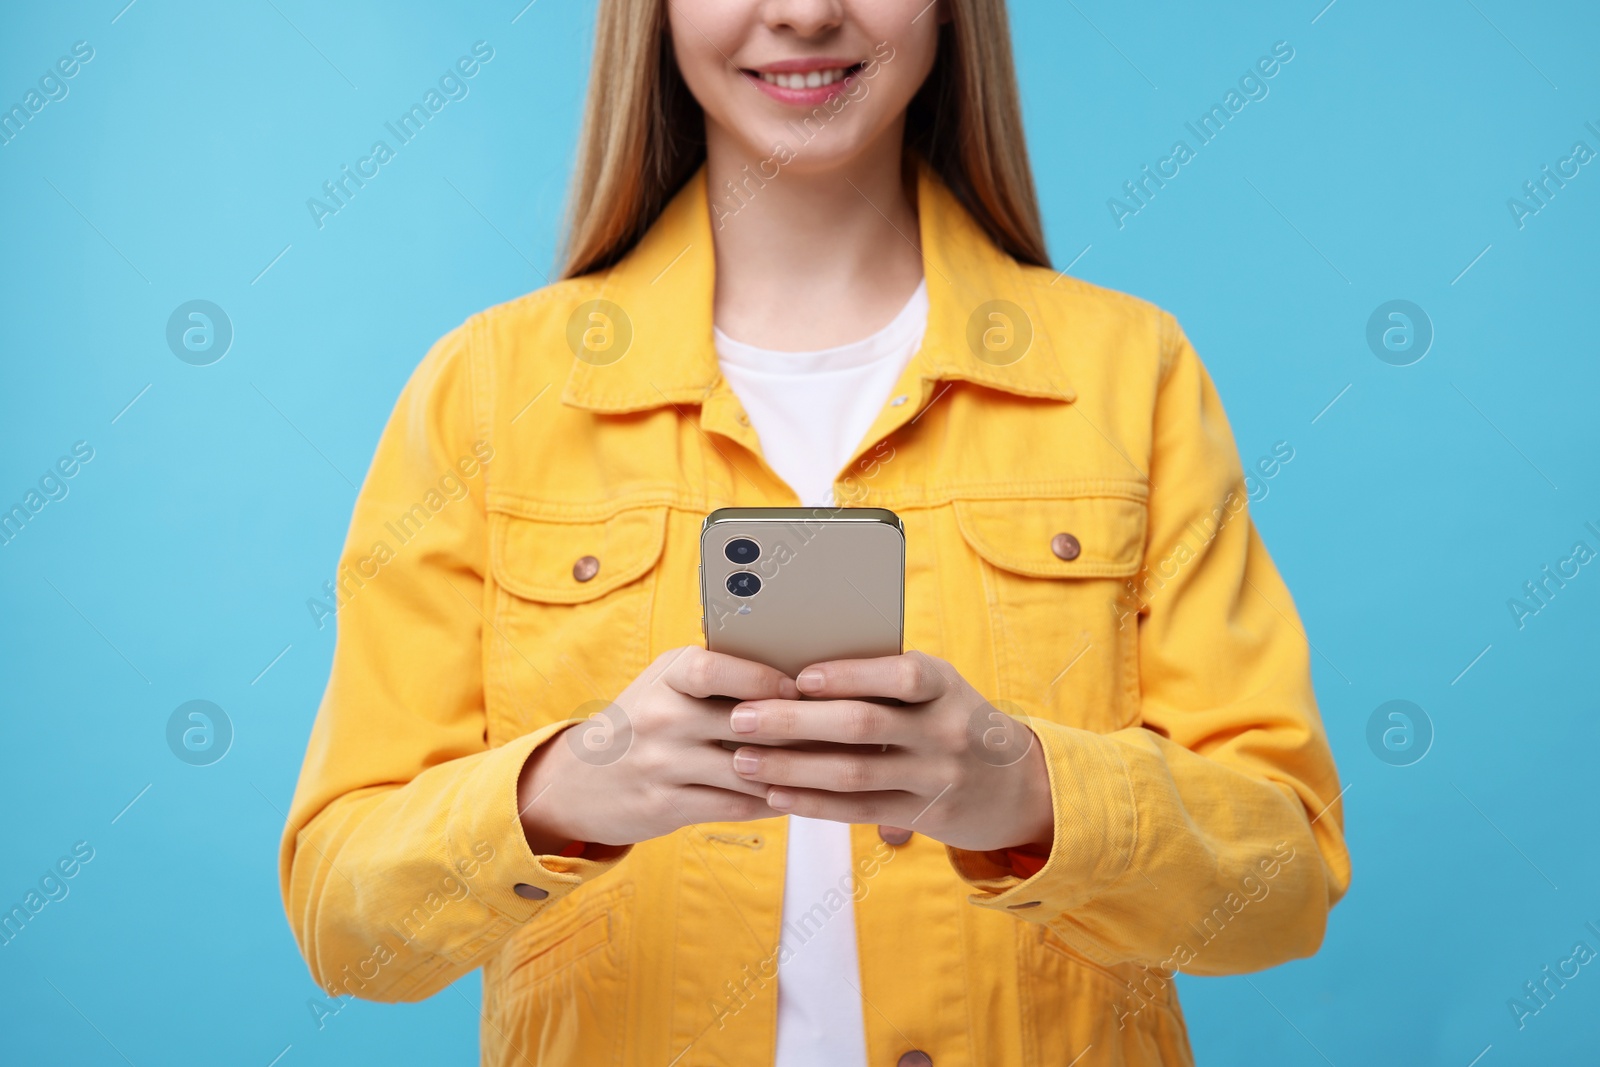 Photo of Woman sending message via smartphone on light blue background, closeup